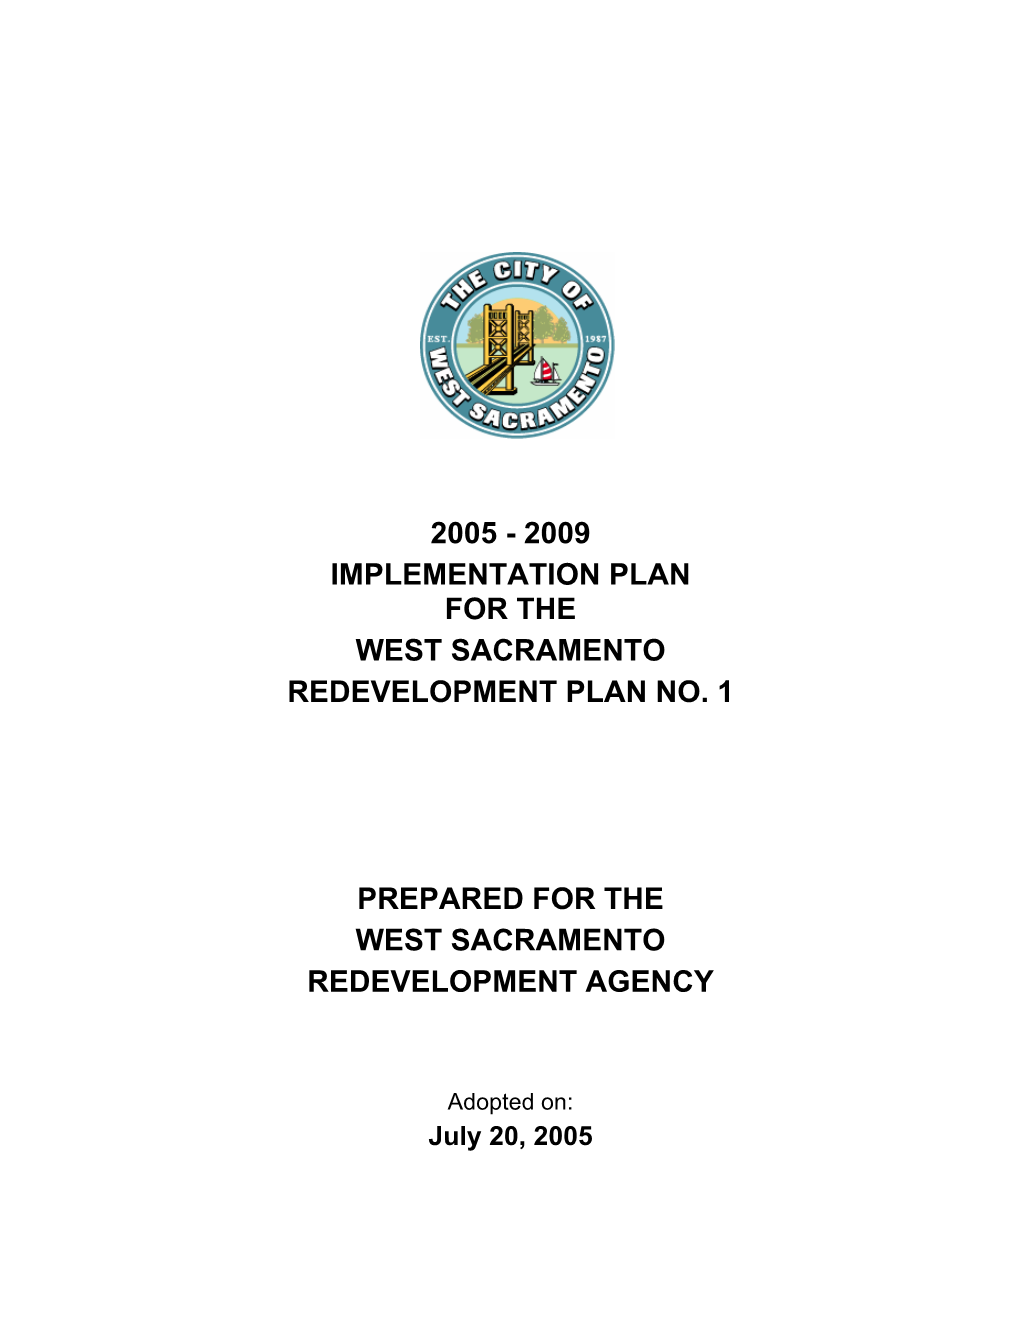 2009 Implementation Plan for the West Sacramento Redevelopment Plan No